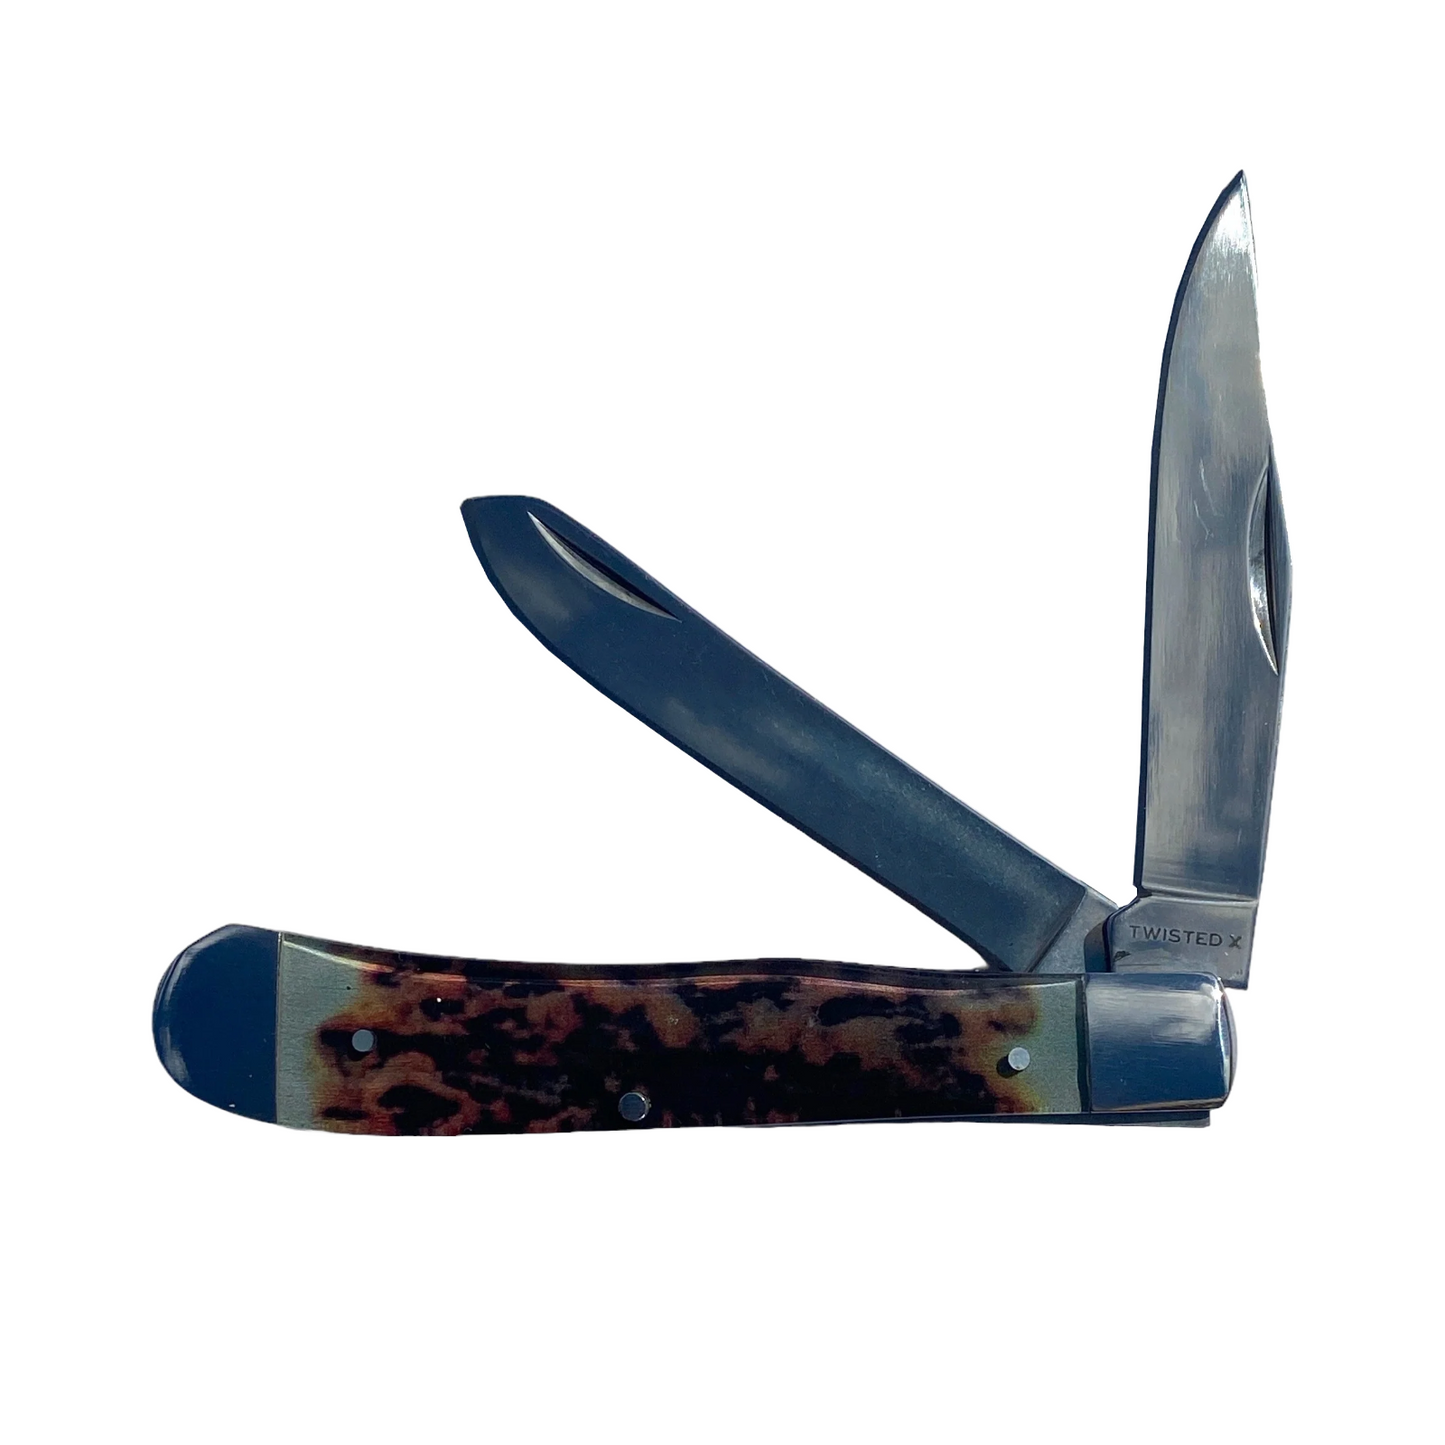 Twisted X Folding Stainless Blade Pocket Knife XK405